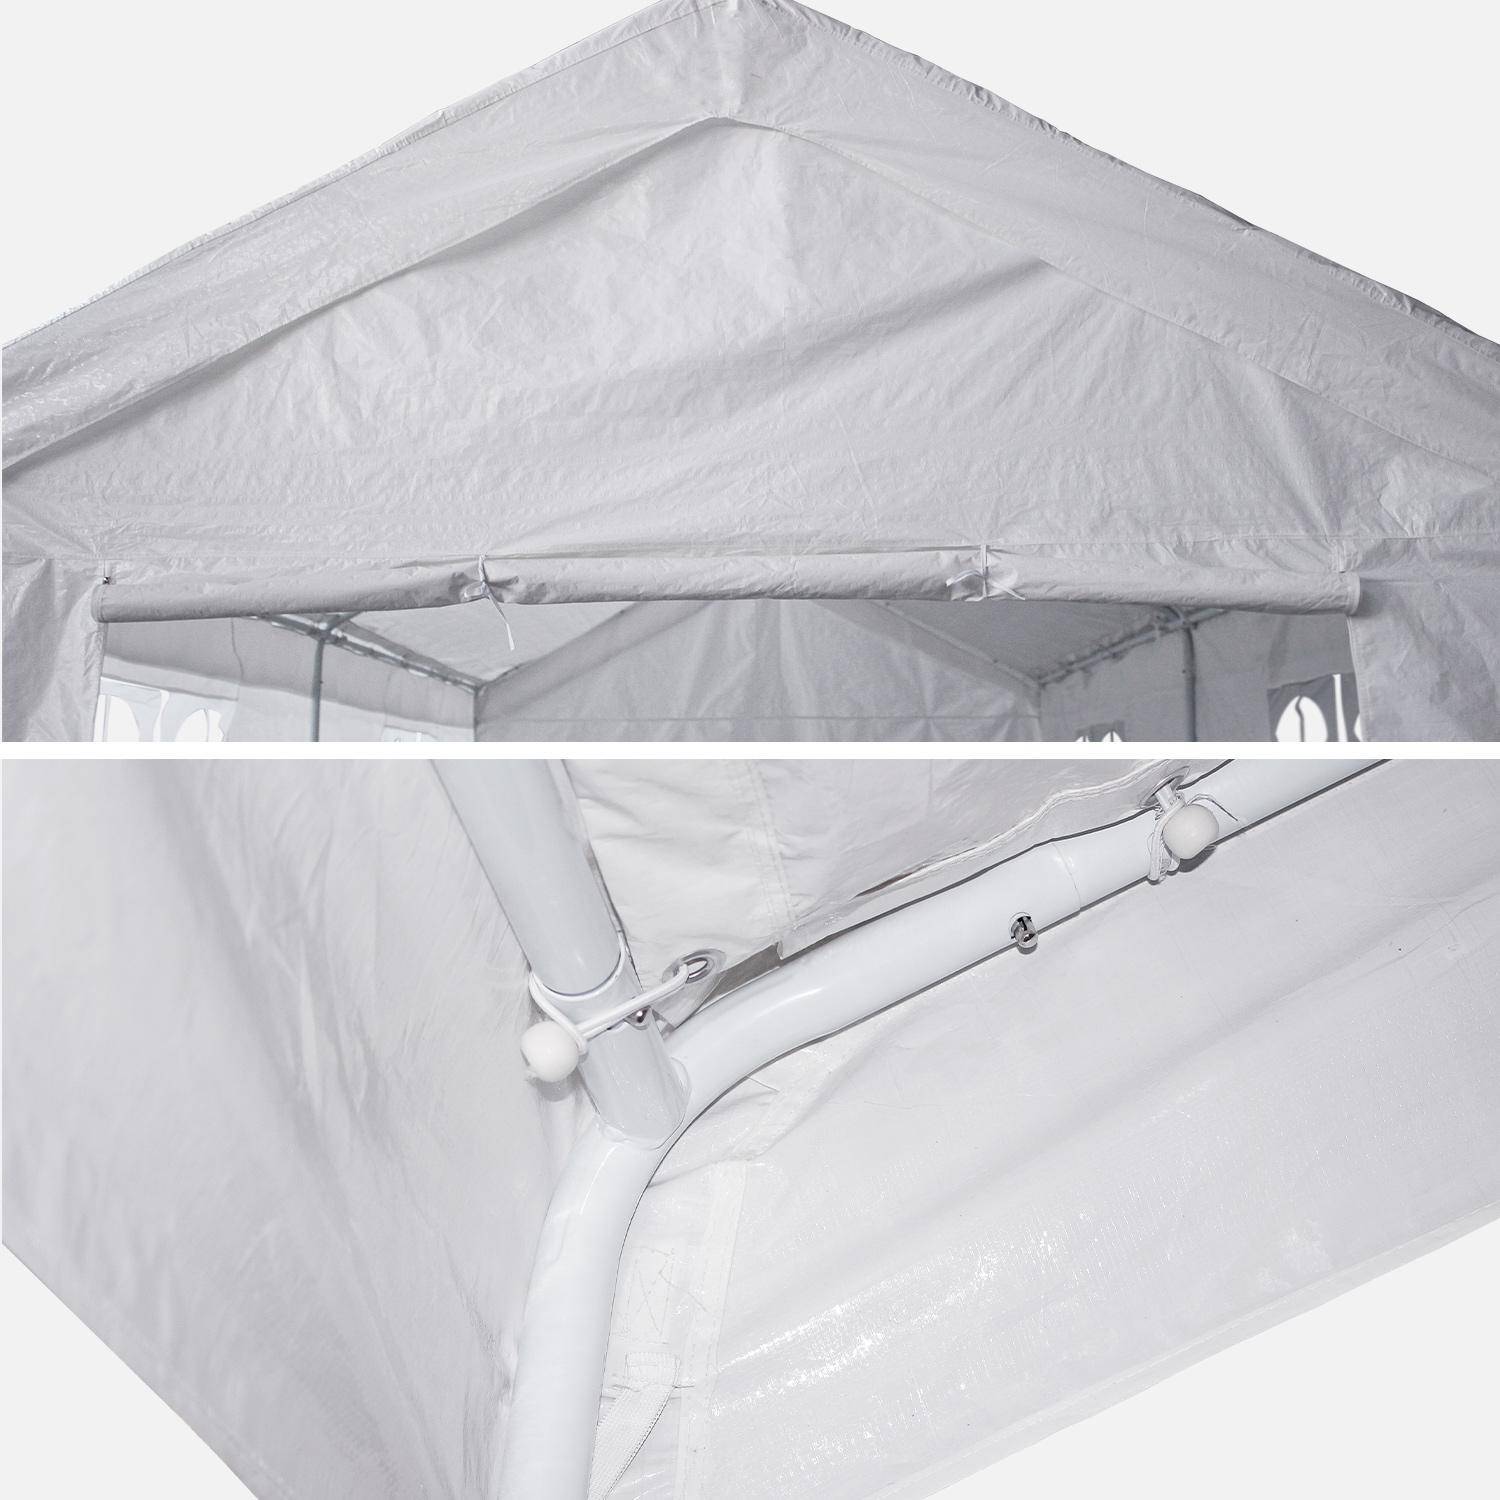 Burdigala tente de réception 3x6m,sweeek,Photo5